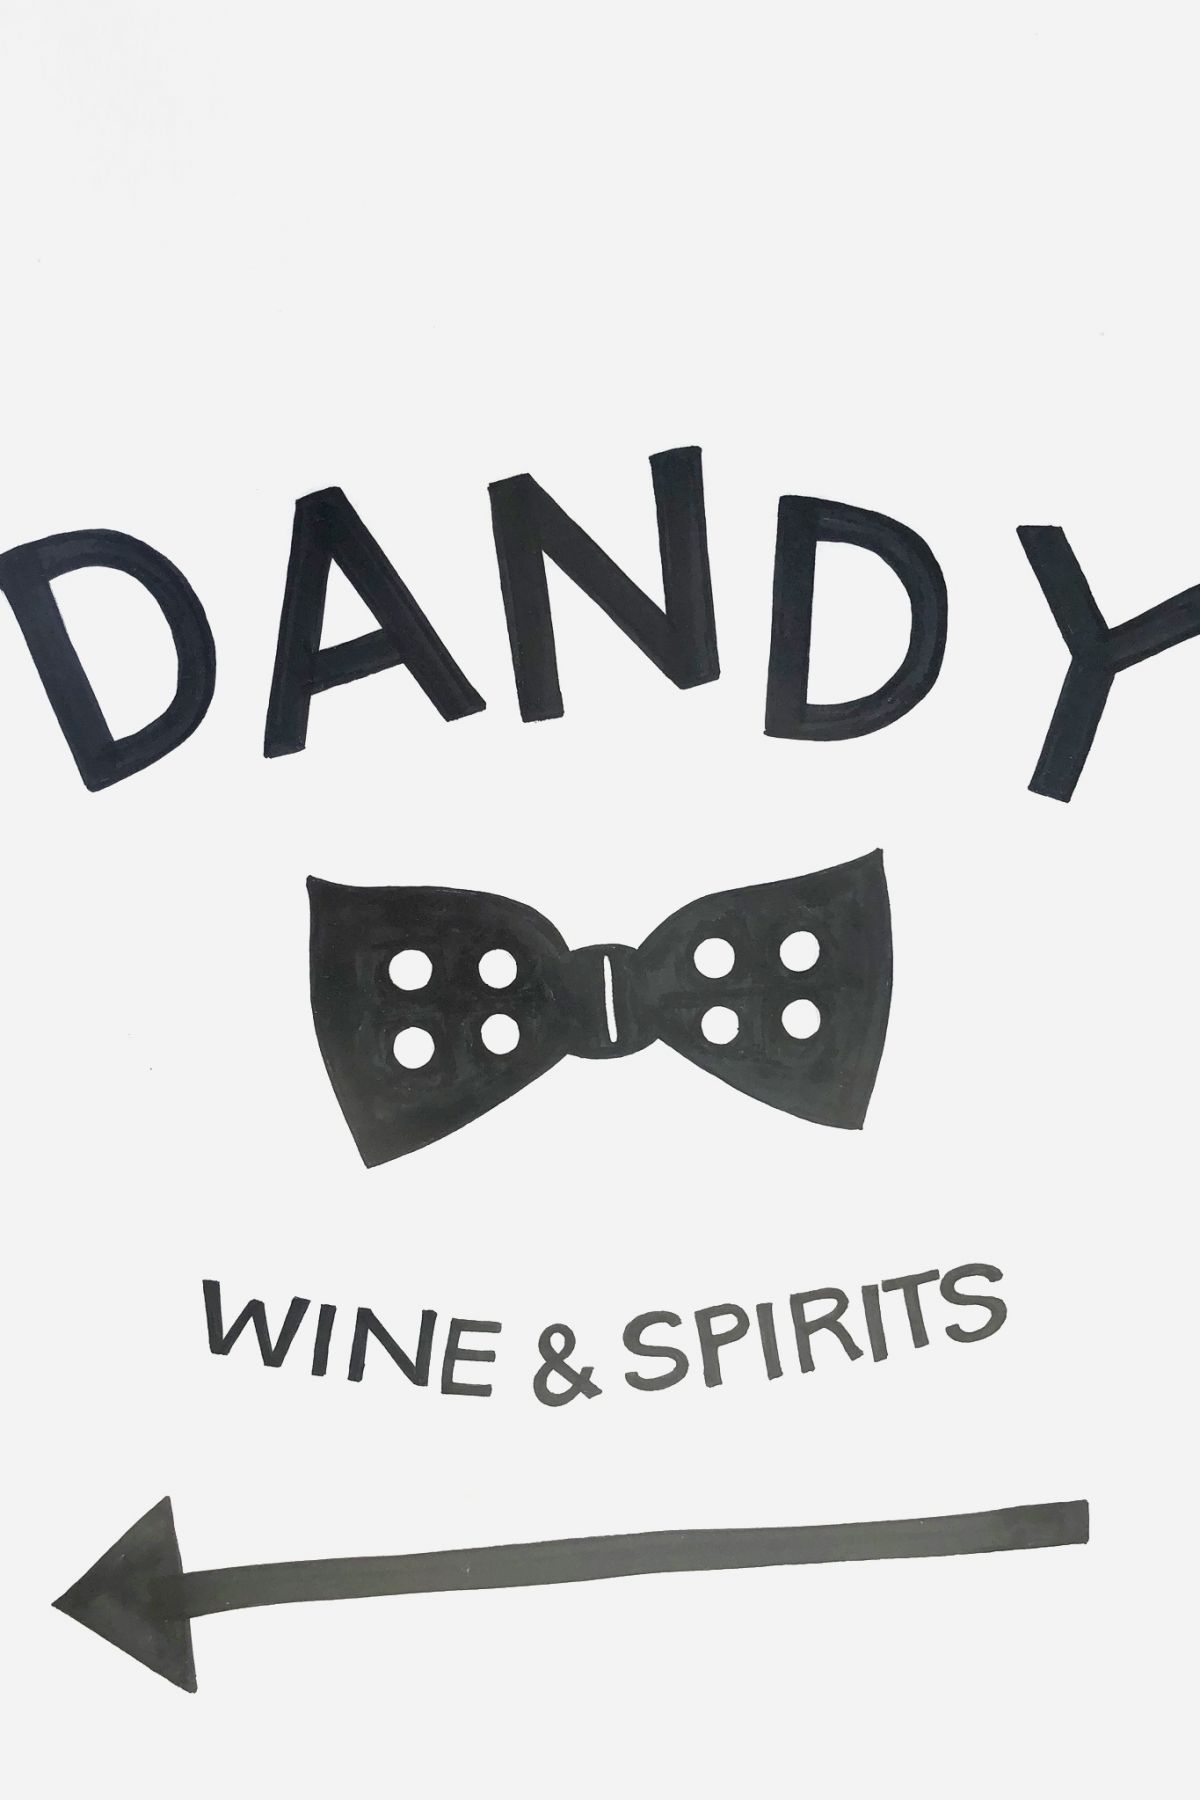 Dandy Wine & Spirits